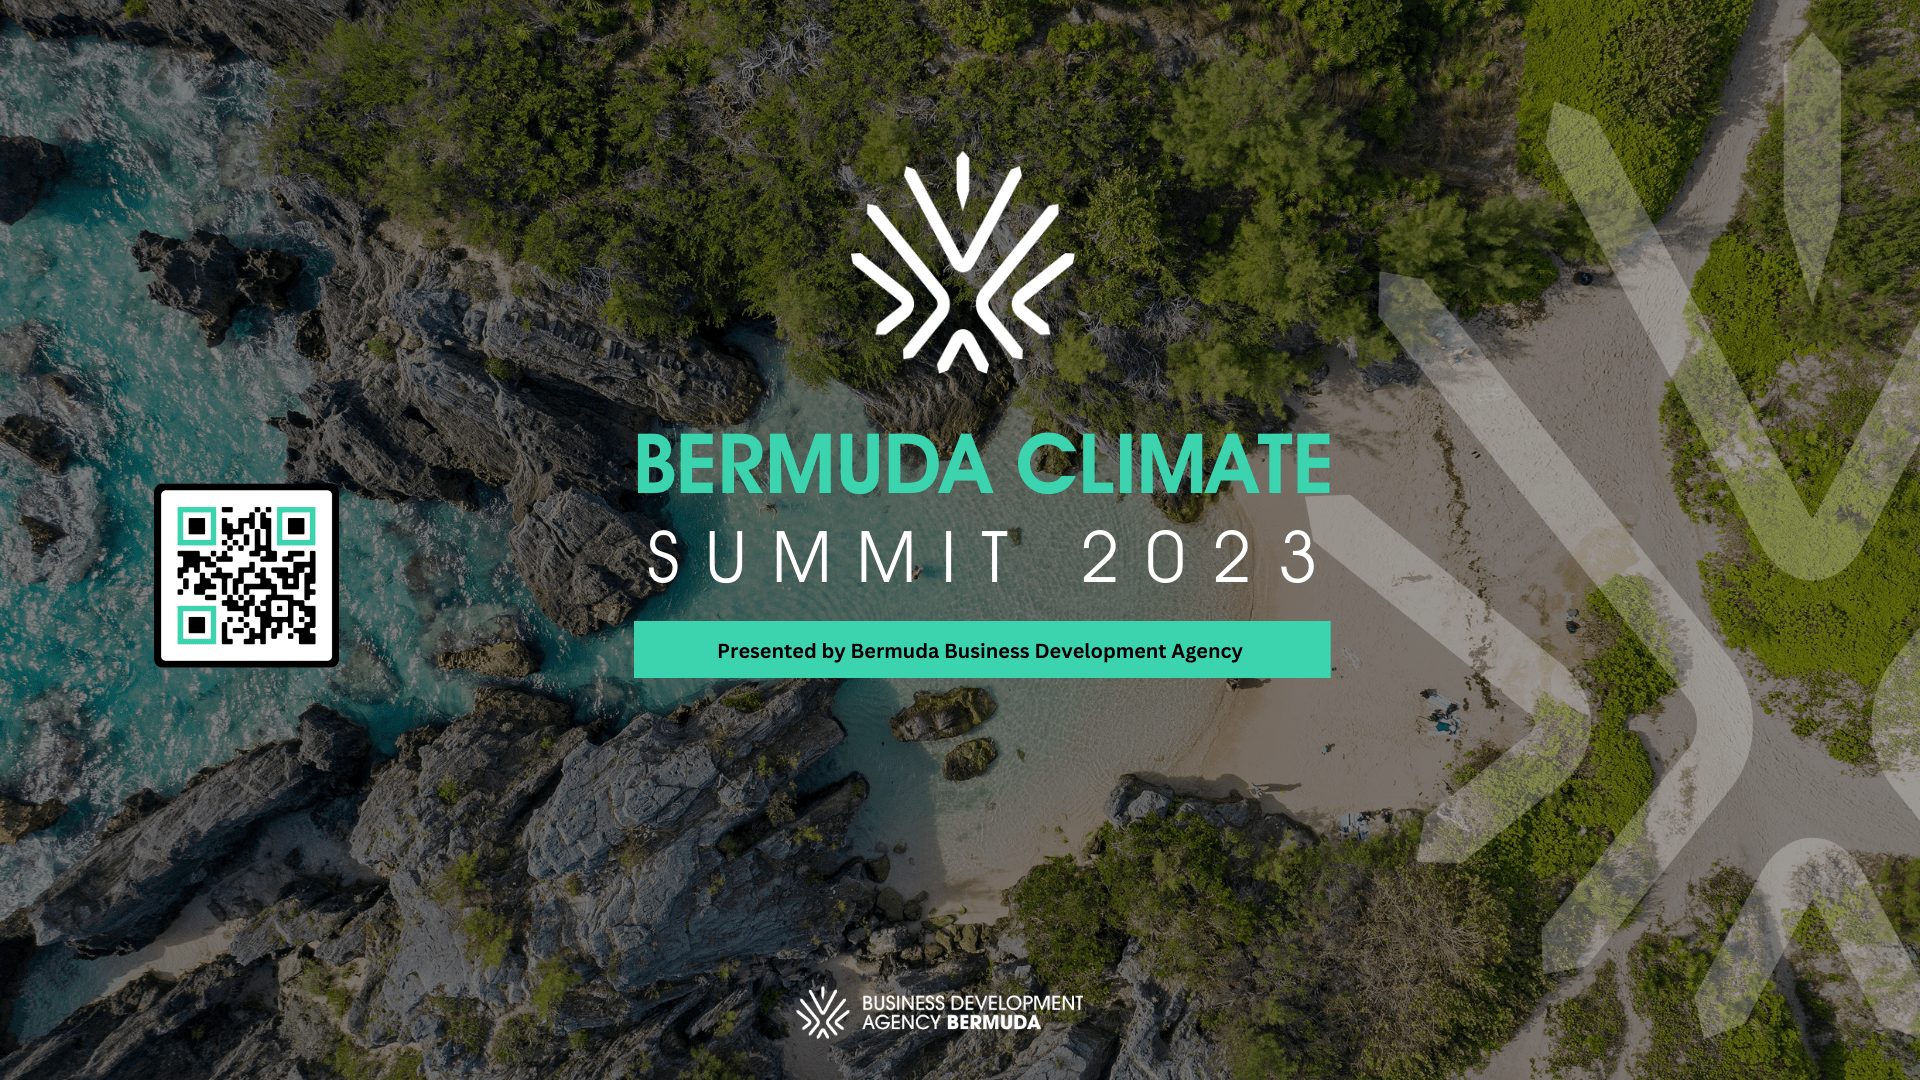 NY Federal Reserve CRO to Give Keynote at Bermuda Climate Summit, June 26-27